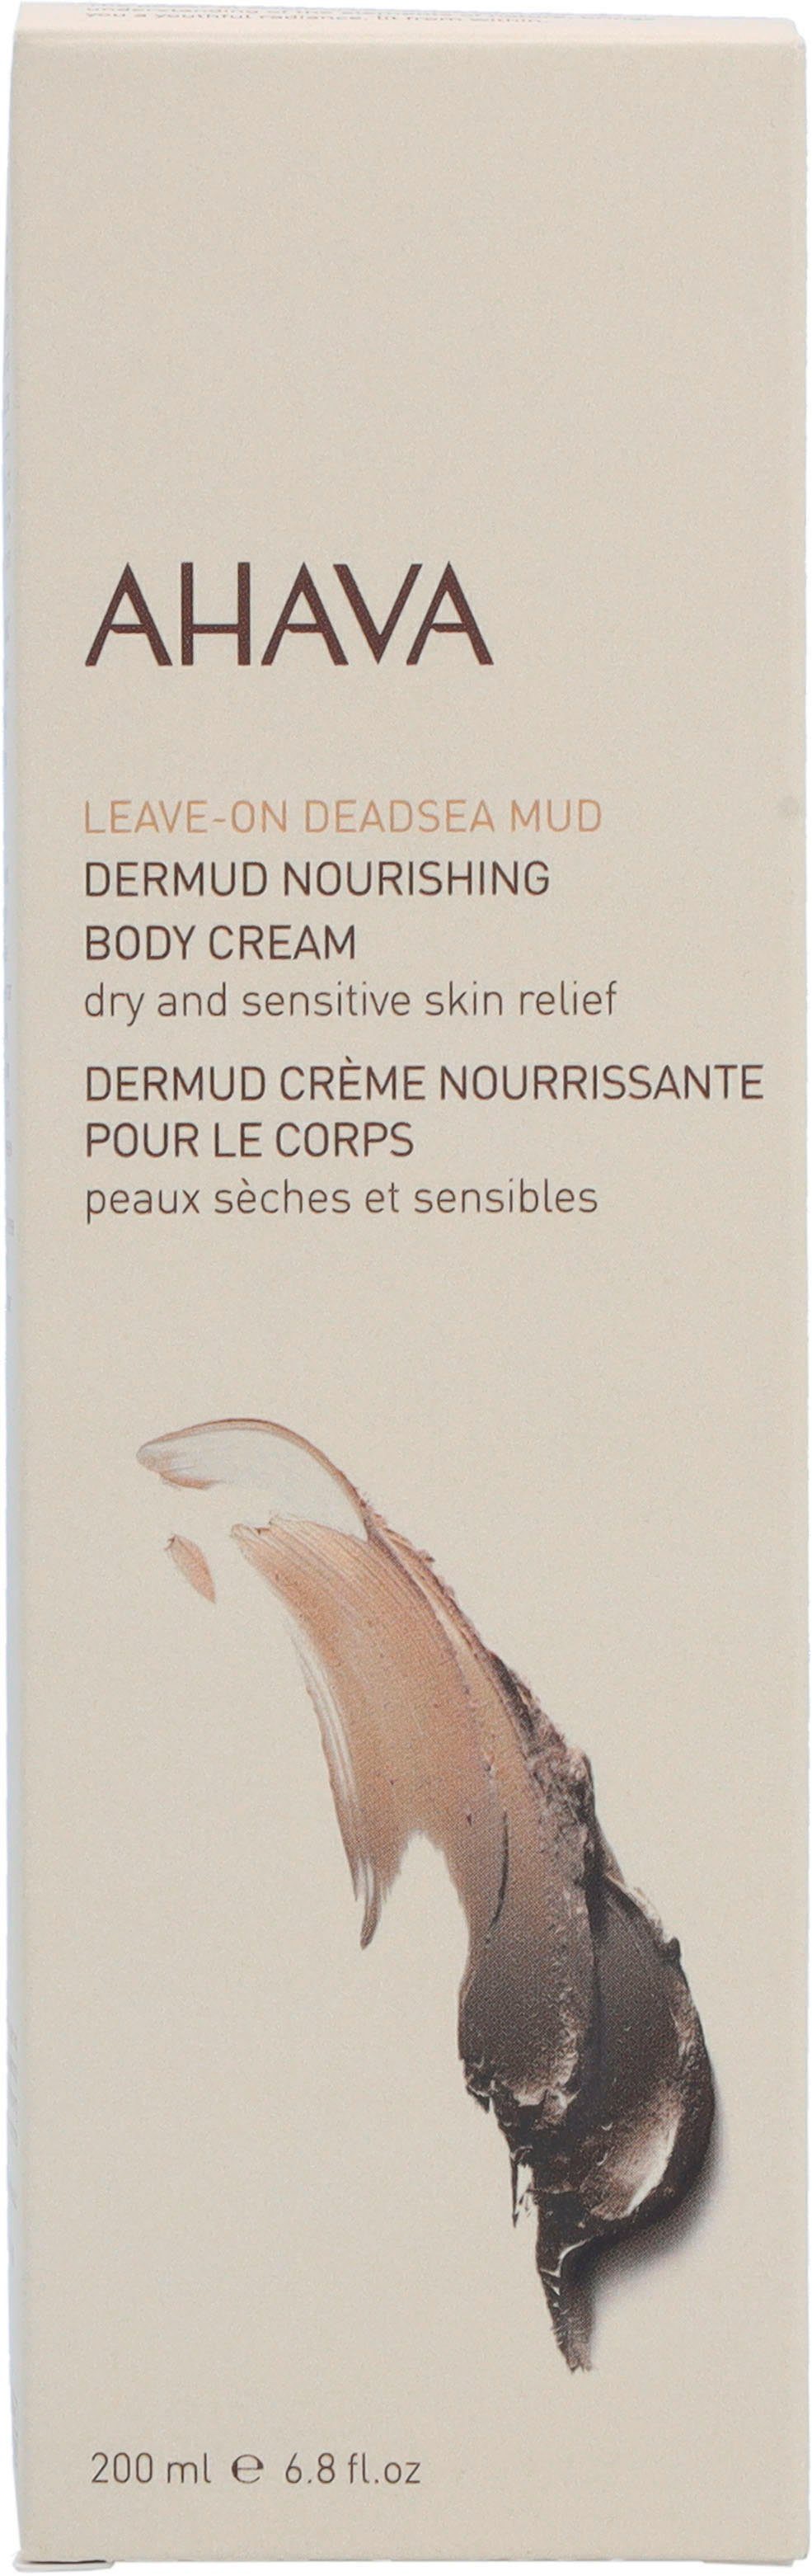 AHAVA Körpercreme Deadsea Mud Dermud Body Nourishing Cream